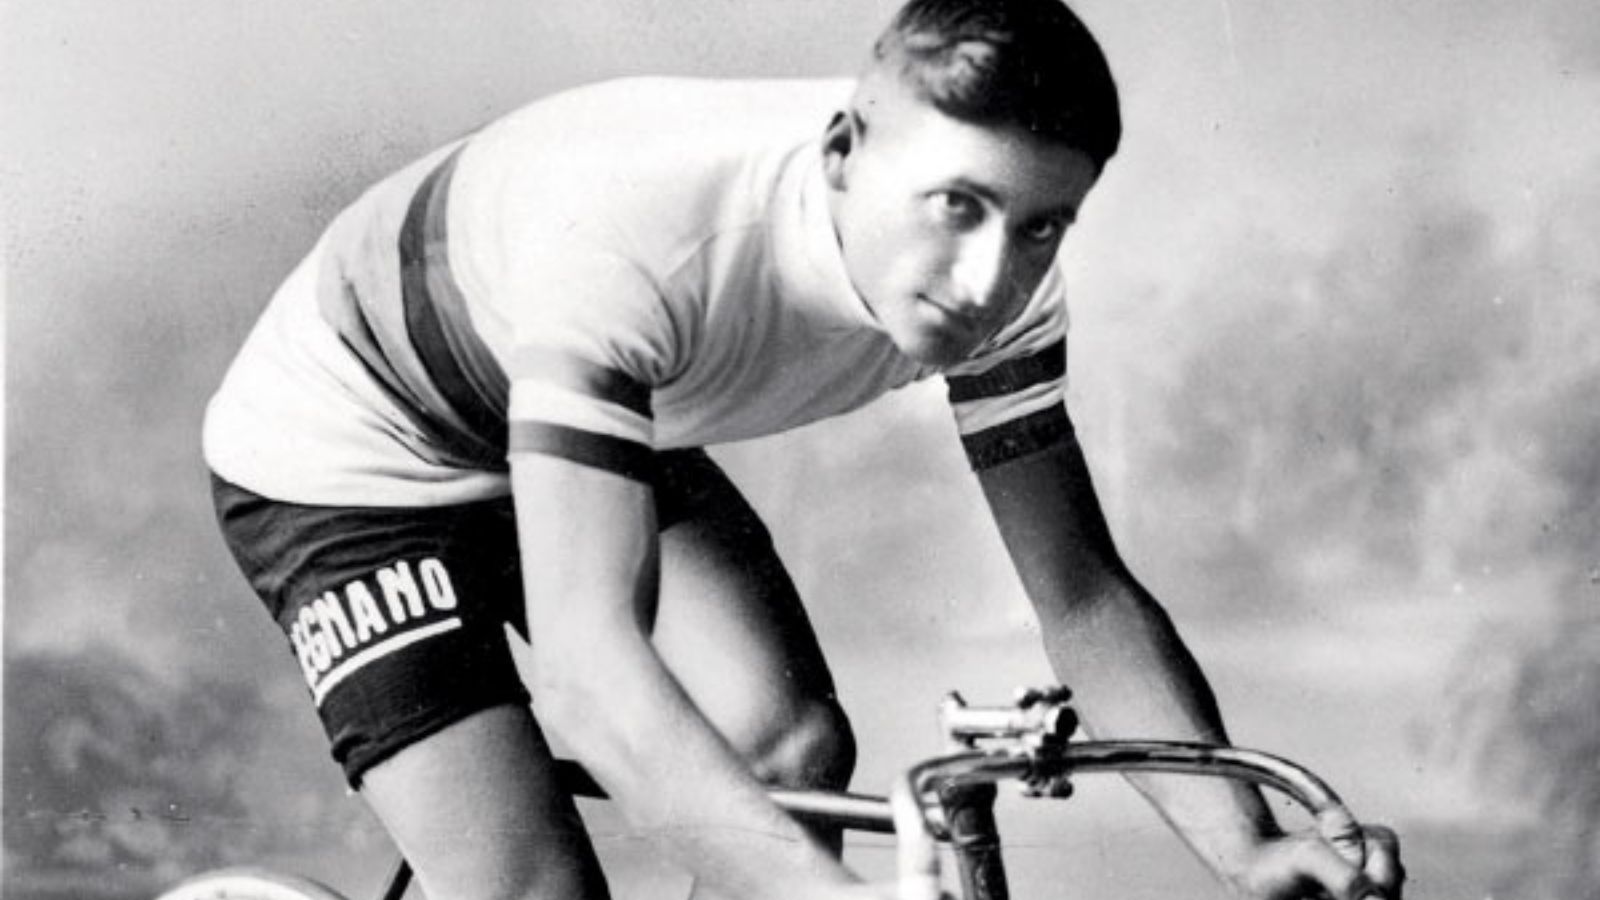 Alfredo Binda was paid to skip the Giro d'Italia in 1930